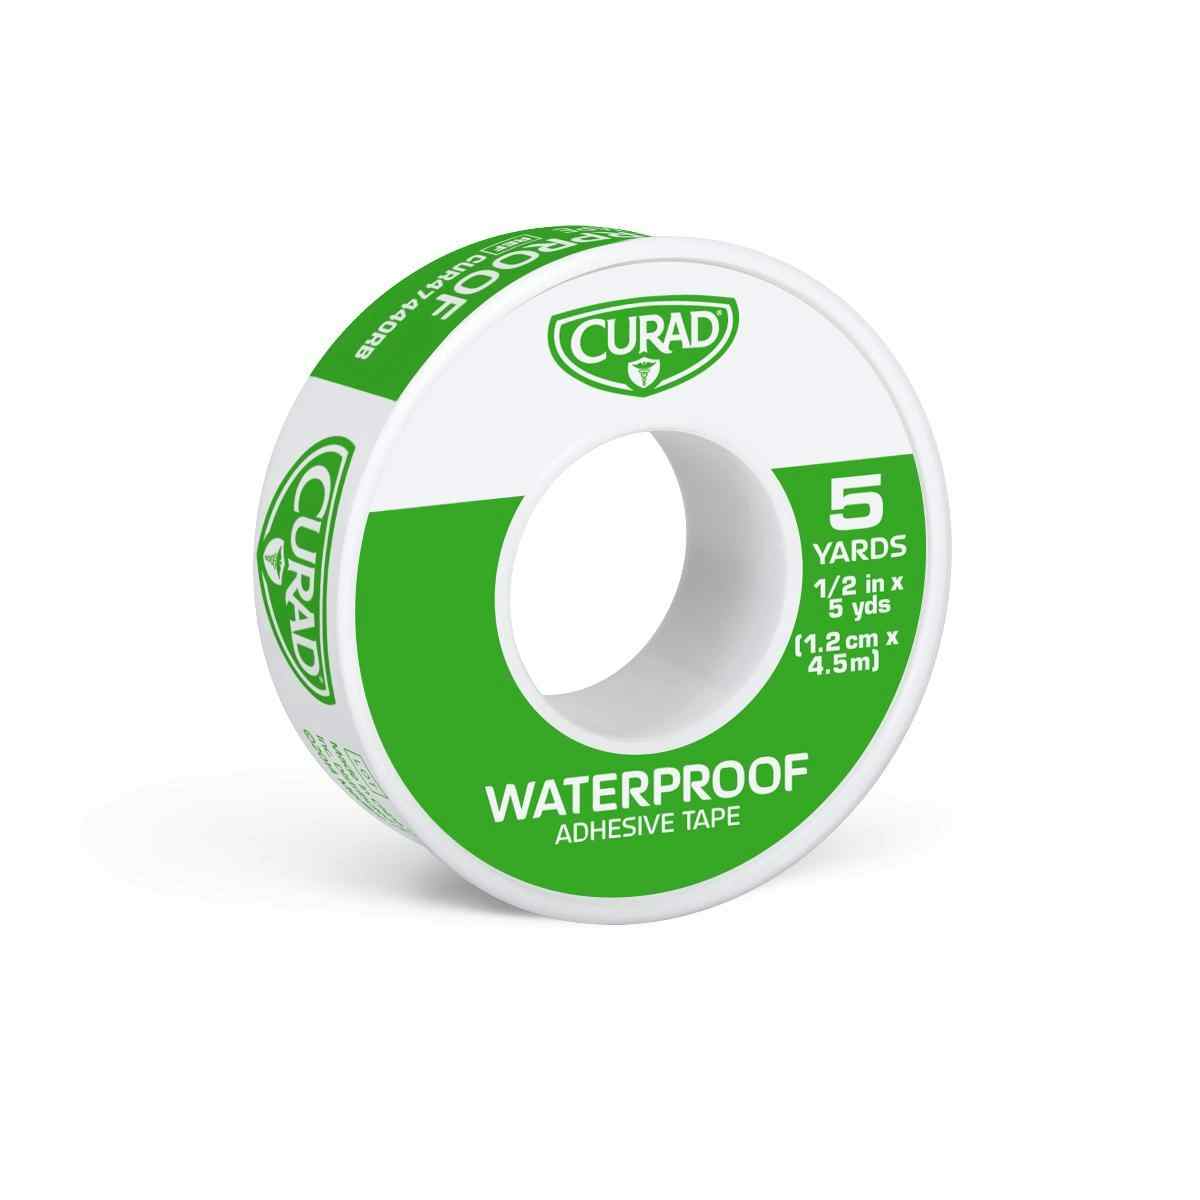 CURAD Waterproof Adhesive Tape, CUR47440RB, 1/2" X 5 yd - Case of 24